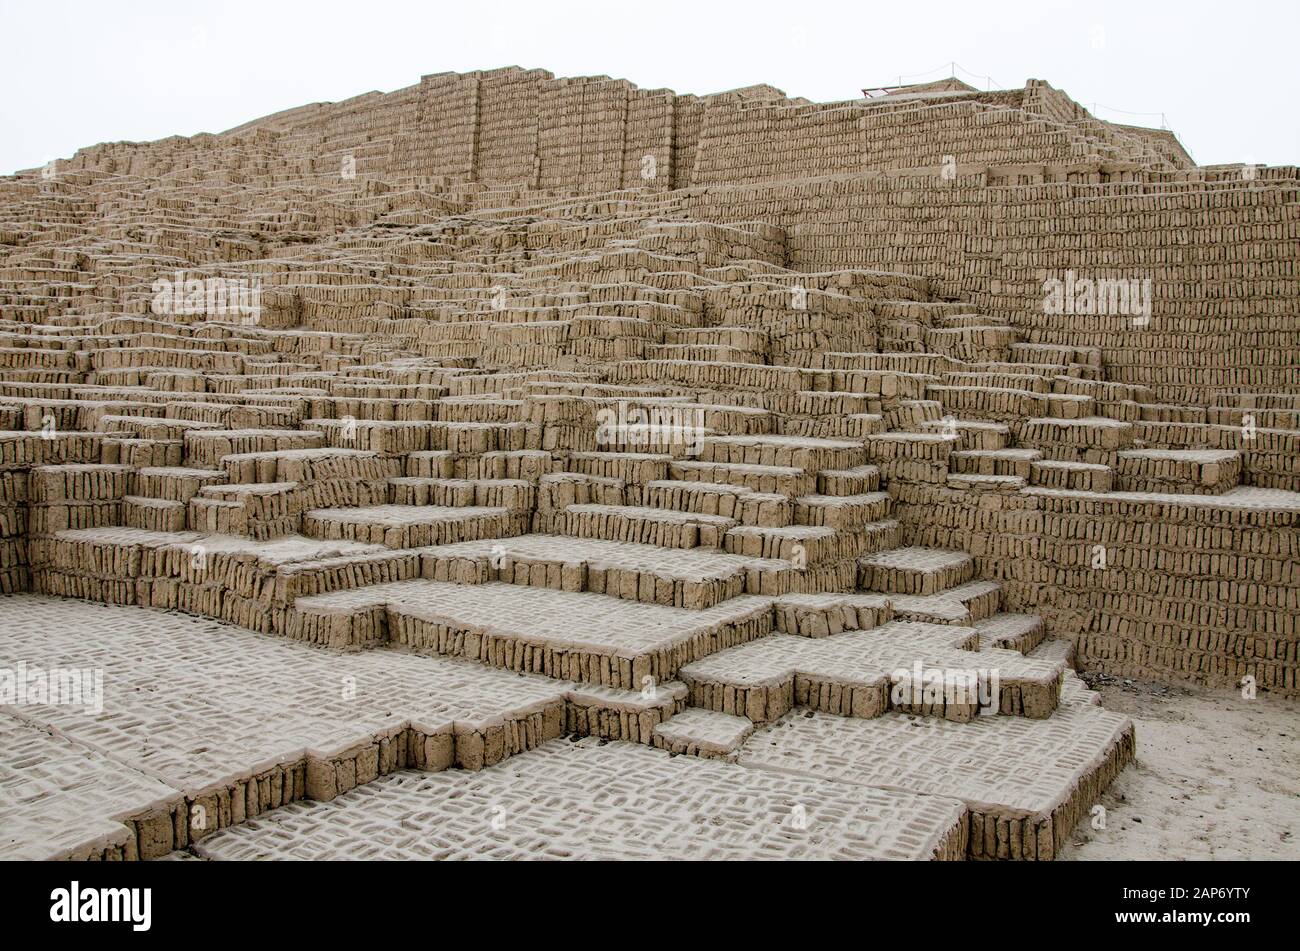 Die präinkadenförmige adobe-pyramide von Huaca Pucllana in Lima, Peru. Stockfoto